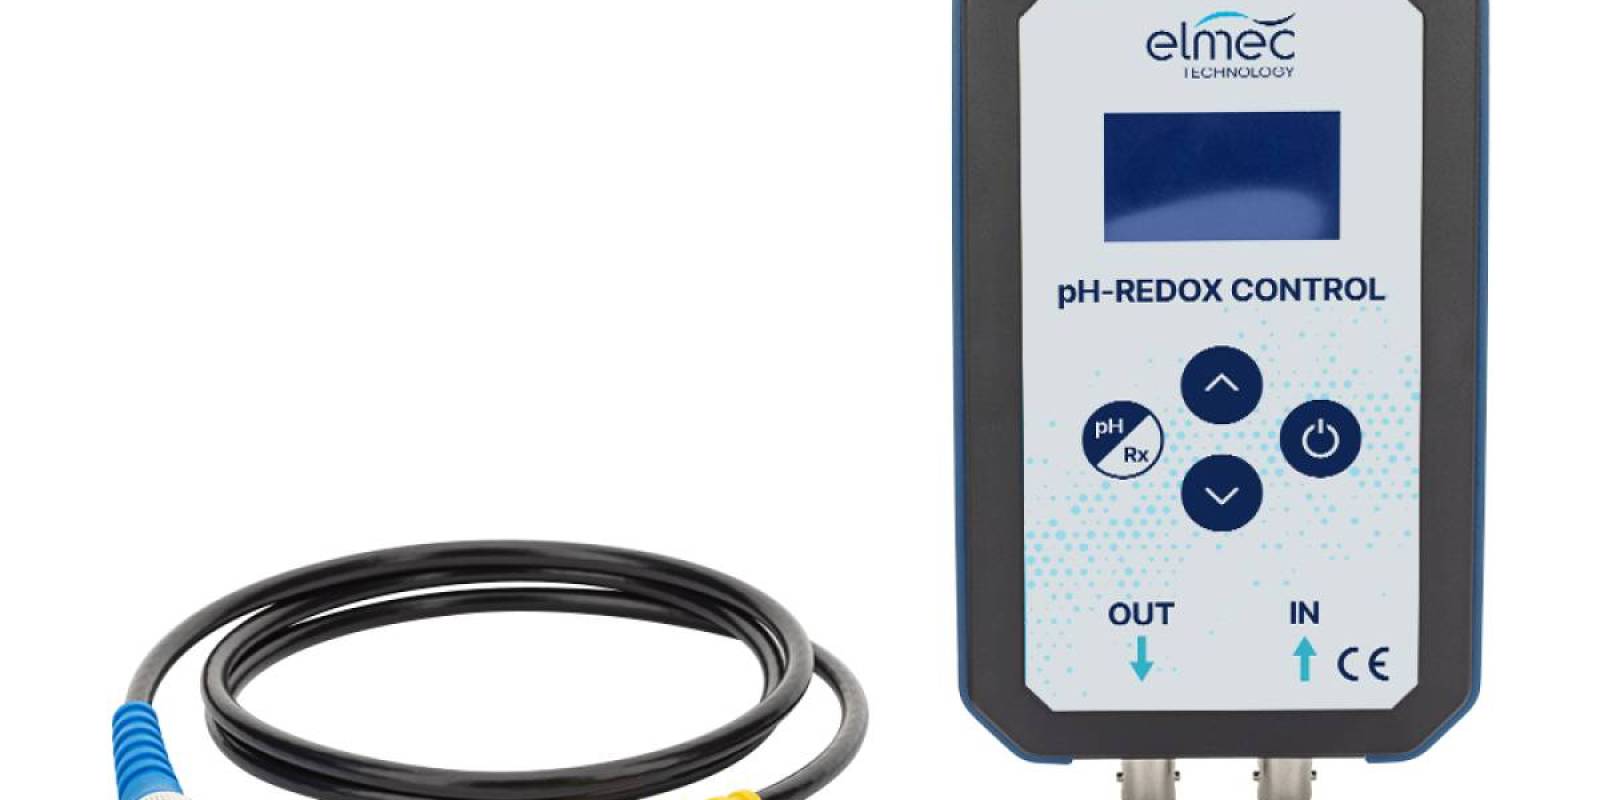 The new Elmec Technology pH/REDOX CONTROL Simulator now available on the European market